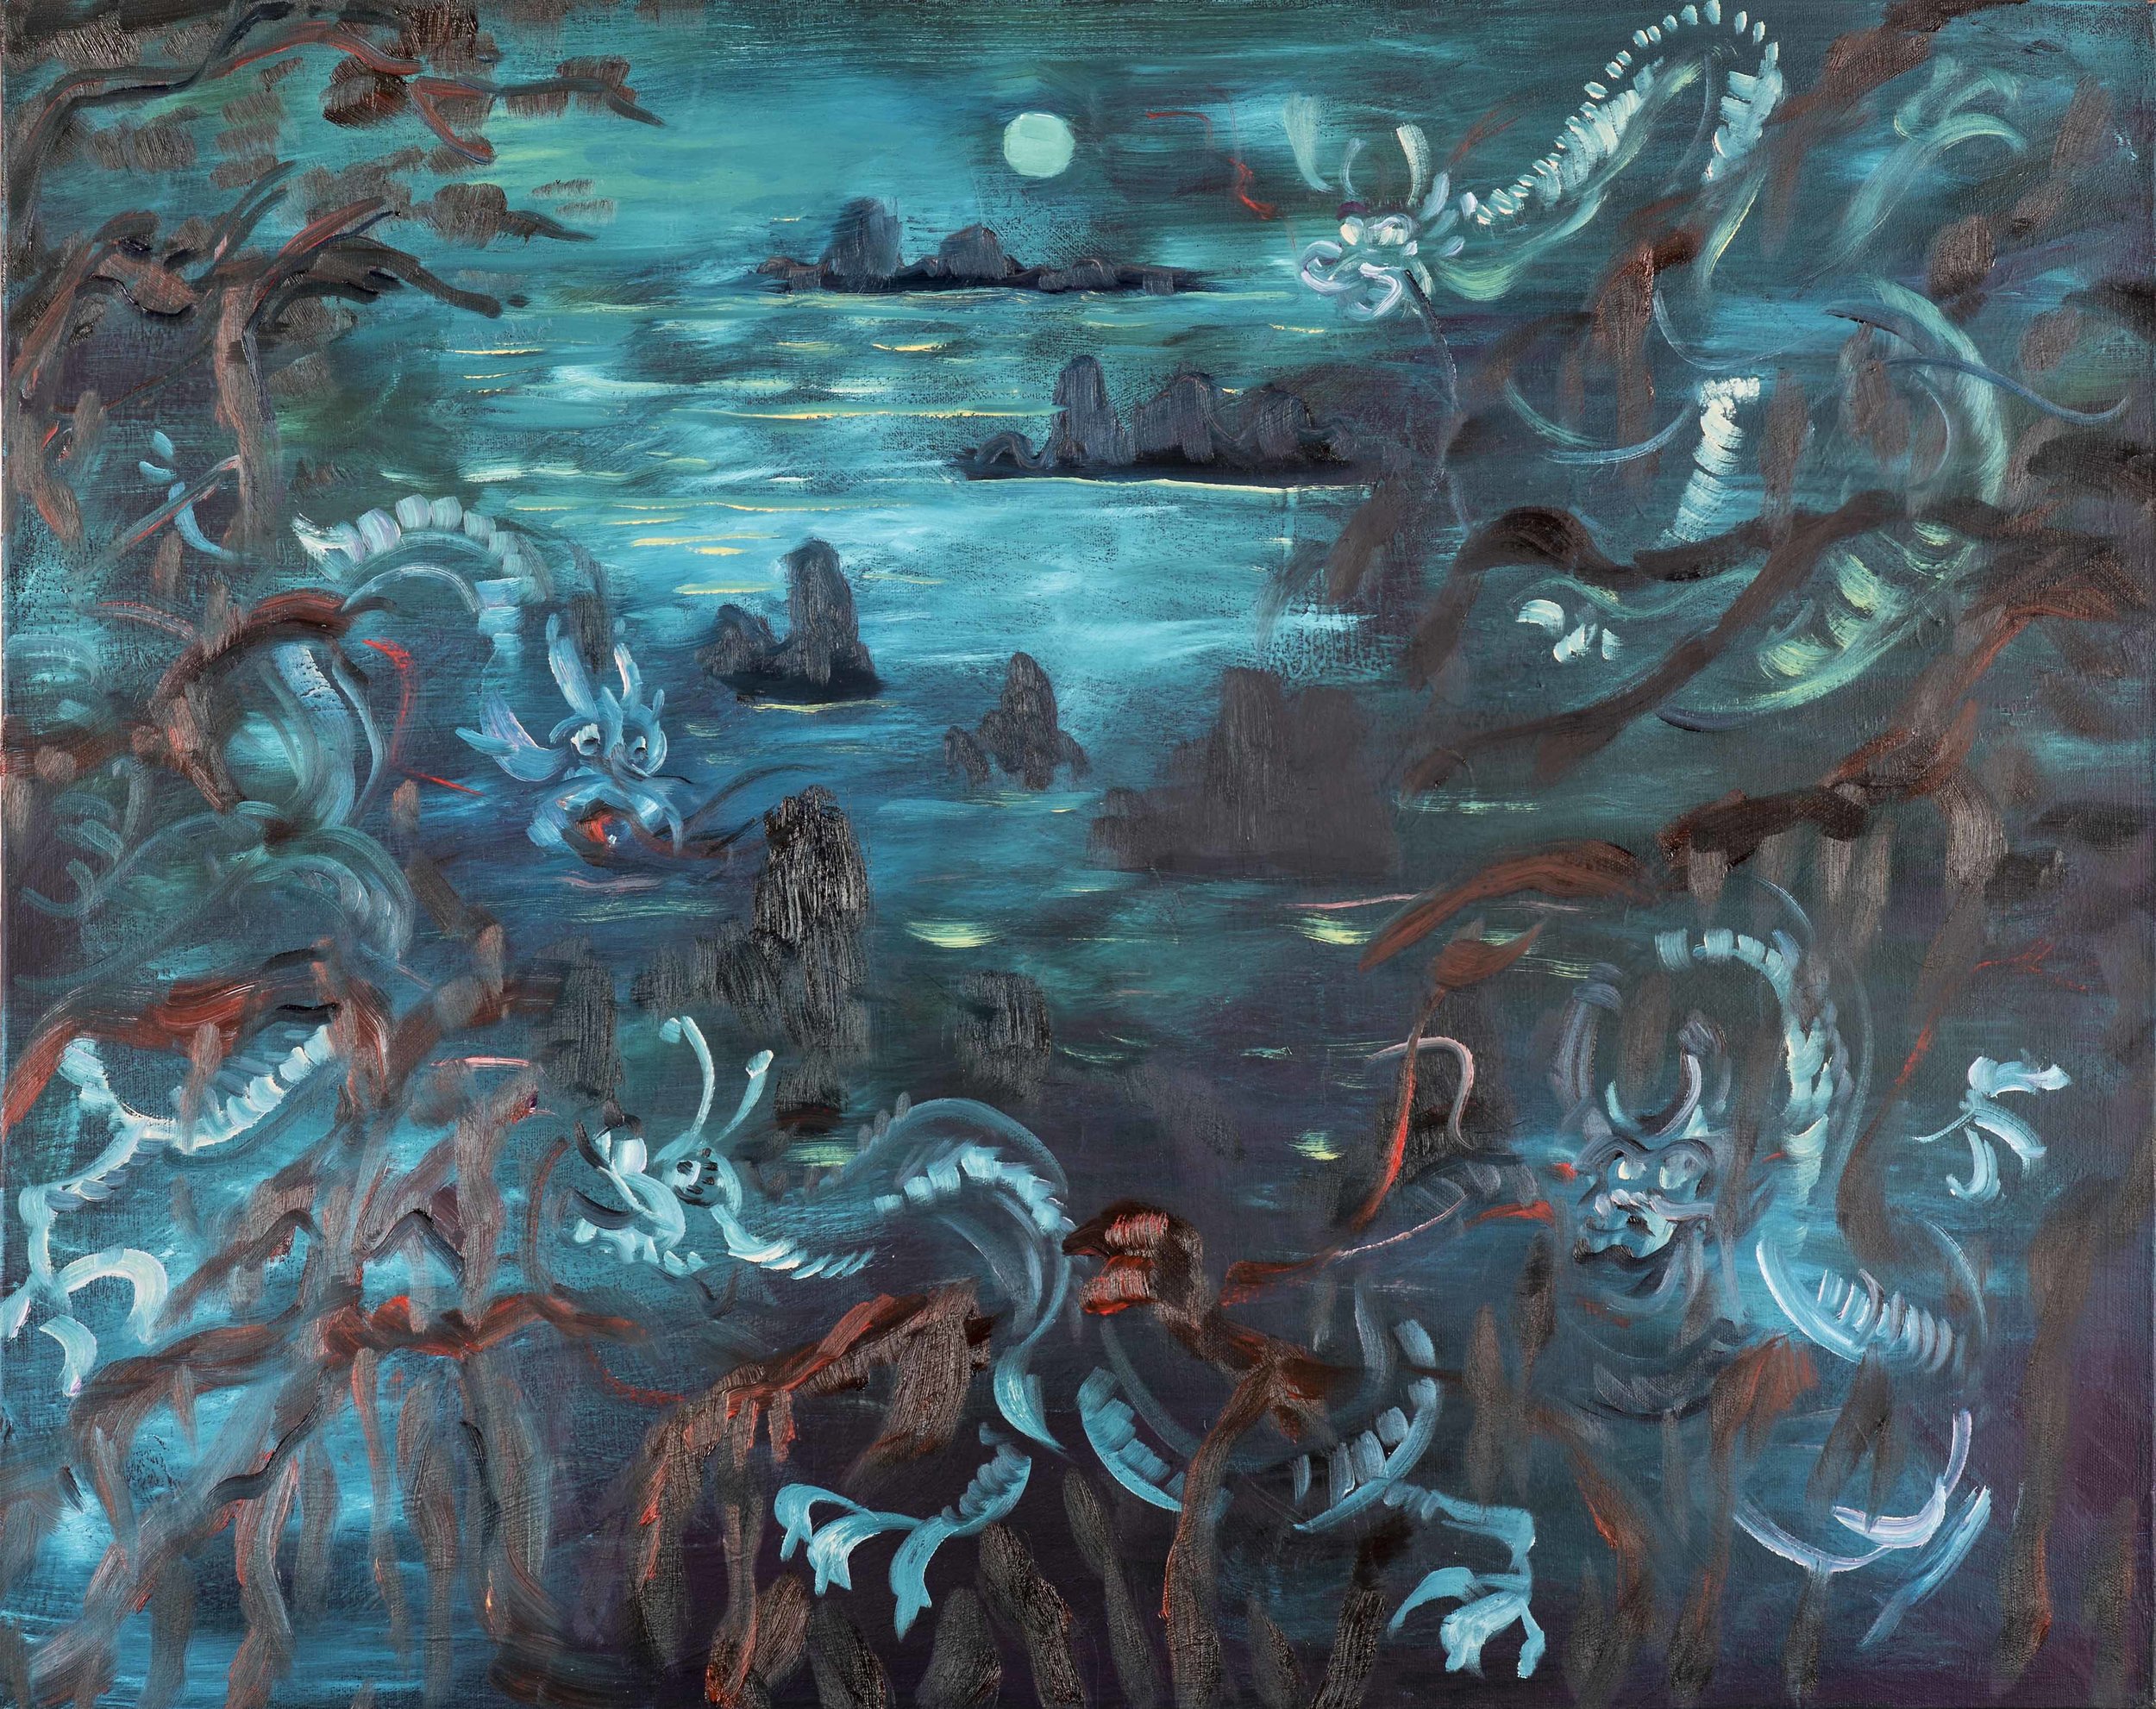   Where the Dragons Roam , 2018 Oil on canvas 24" x 30" 